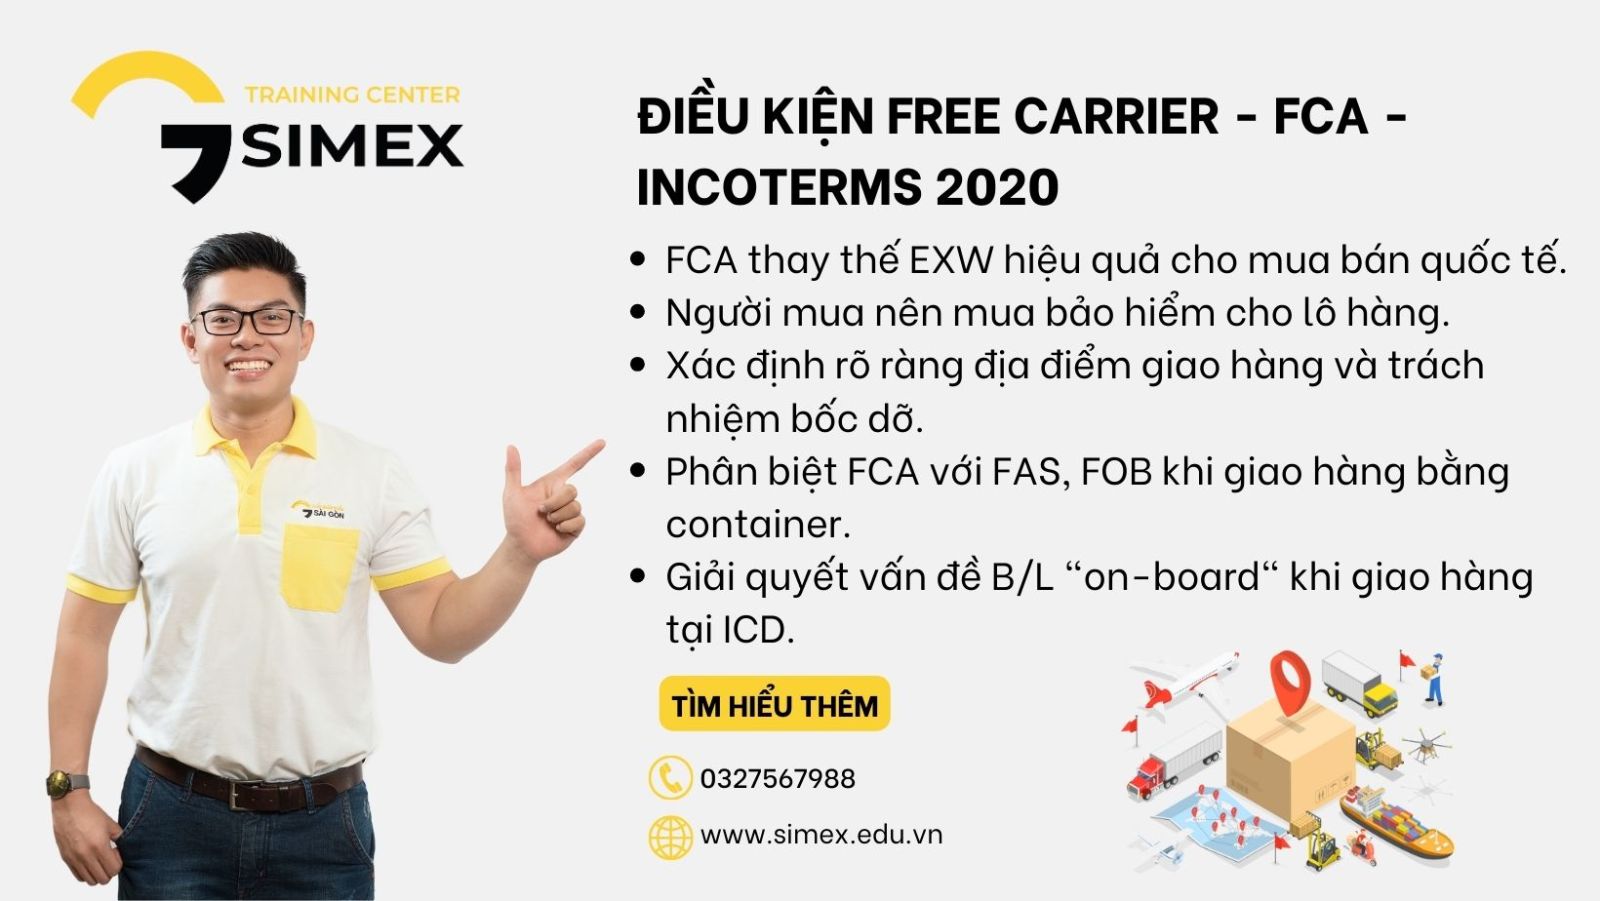 tom tat Điều Kiện Free Carrier - FCA - Incoterms 2020